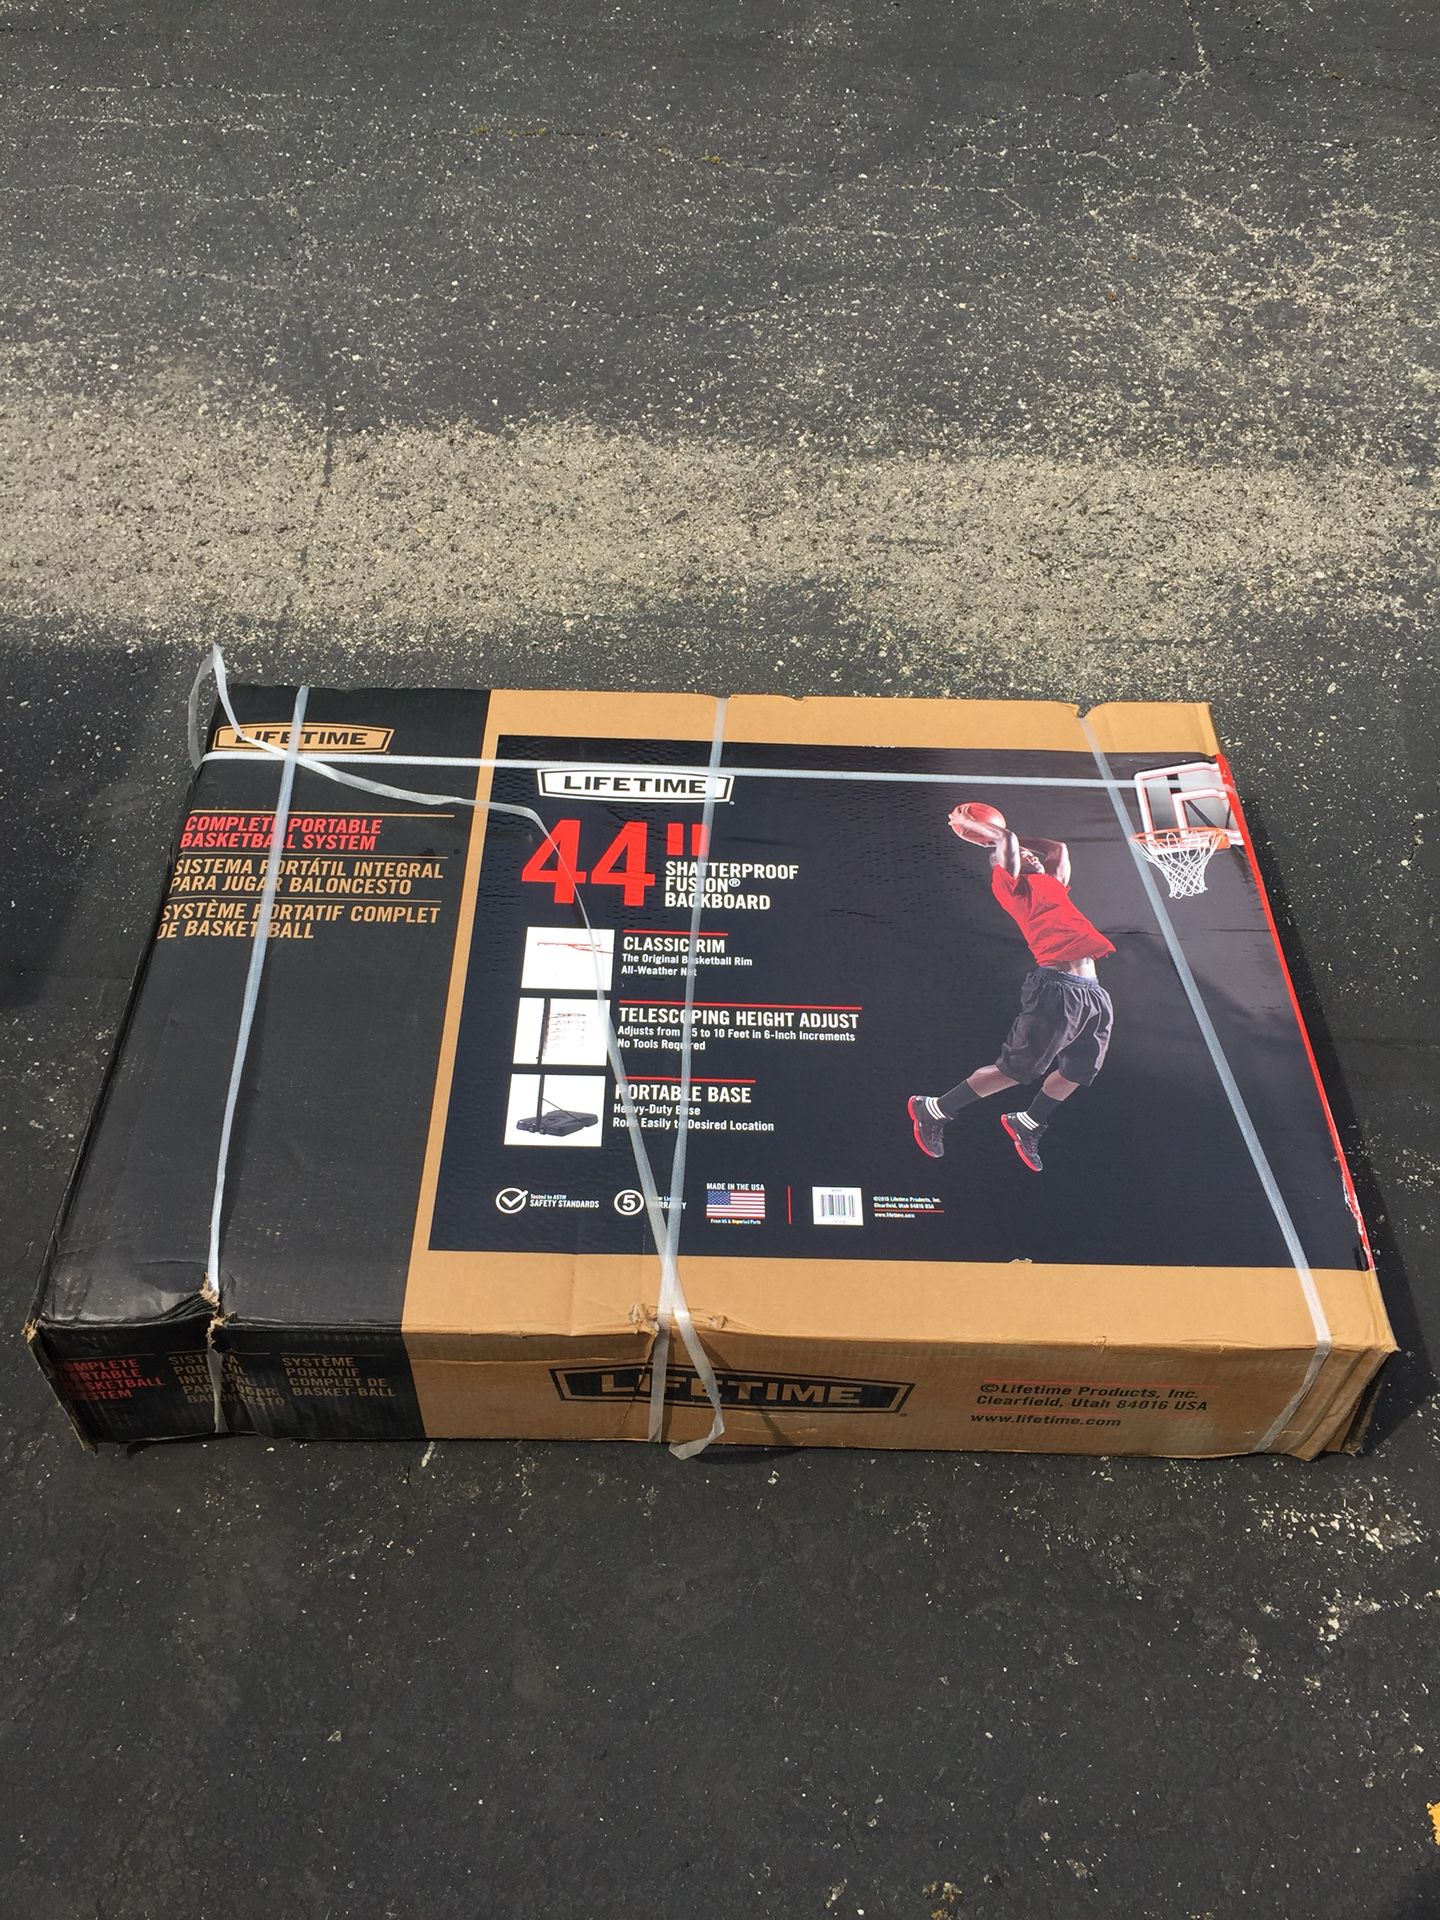 Lifetime Portable 44” Shatterproof Basketball System Brand New